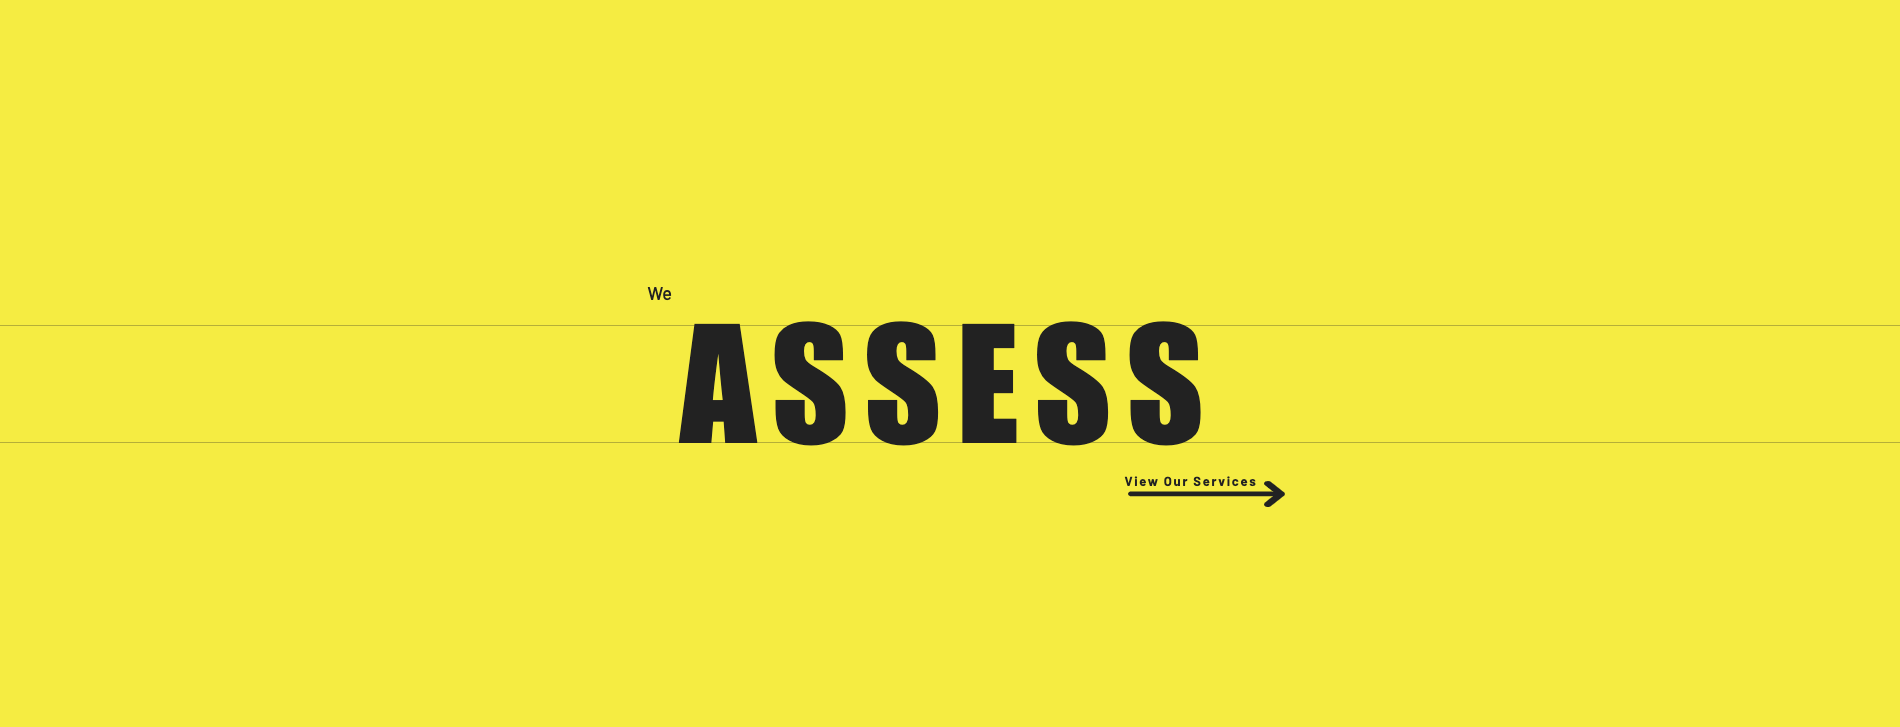 We assess